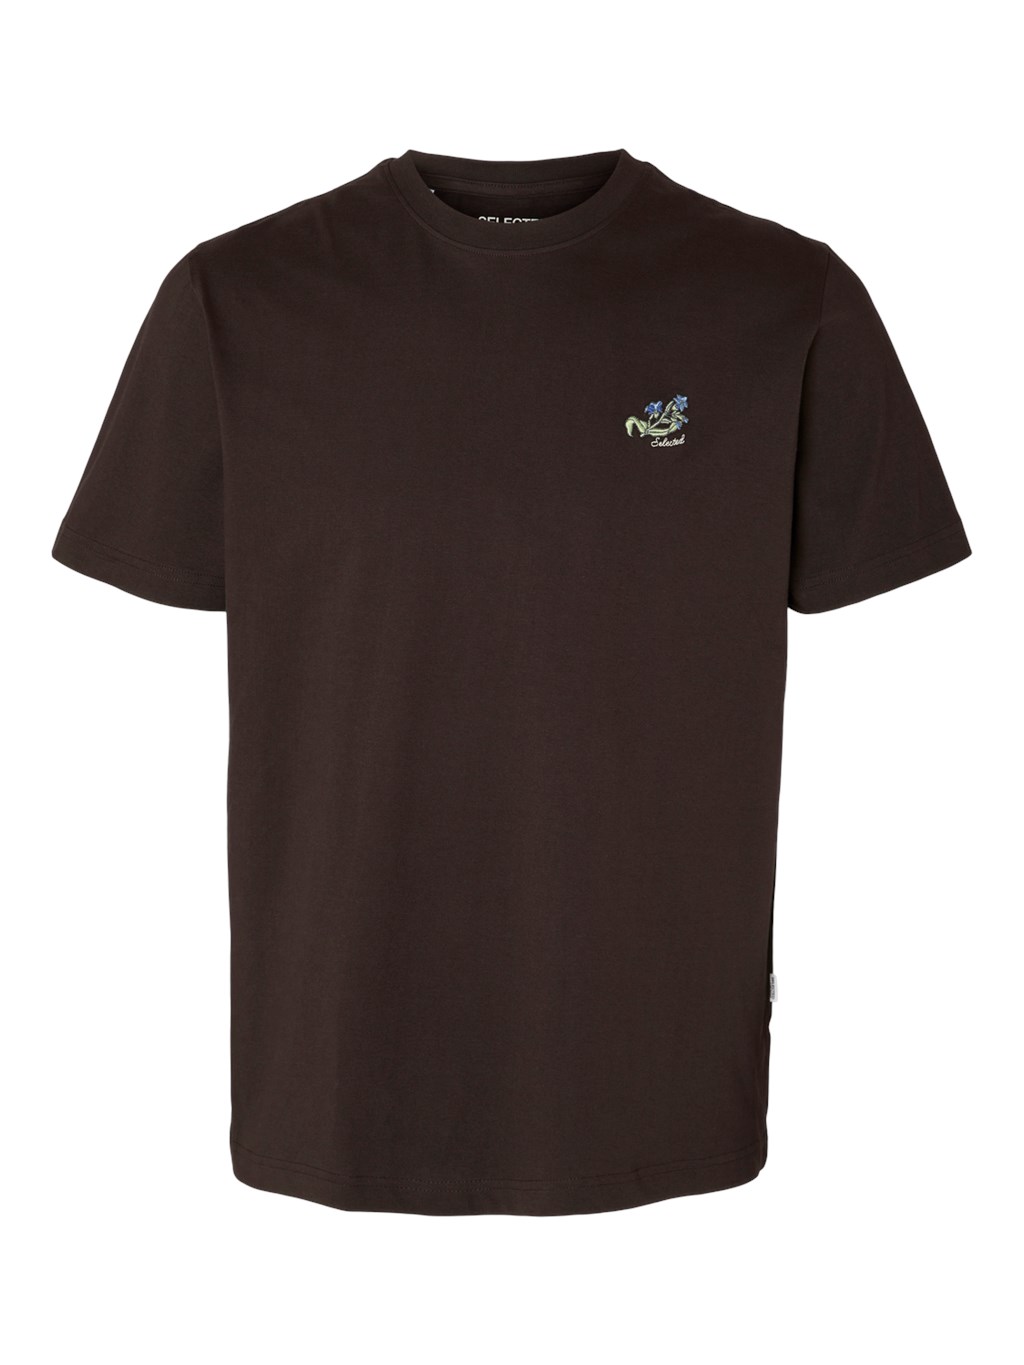 Garland Embossed T-Shirt